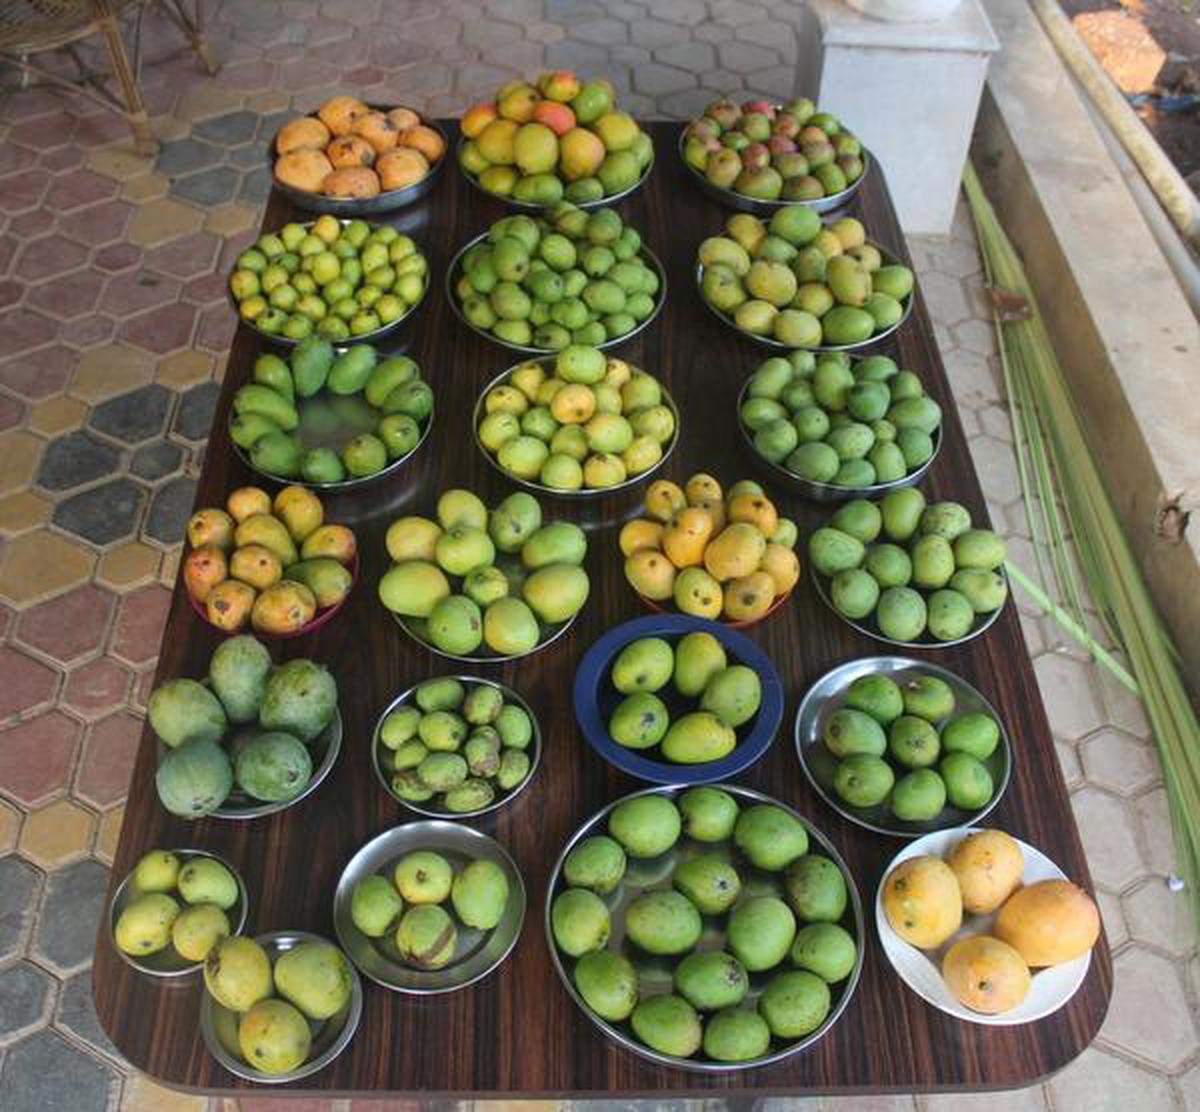 Some mango varieties available in Kannapuram